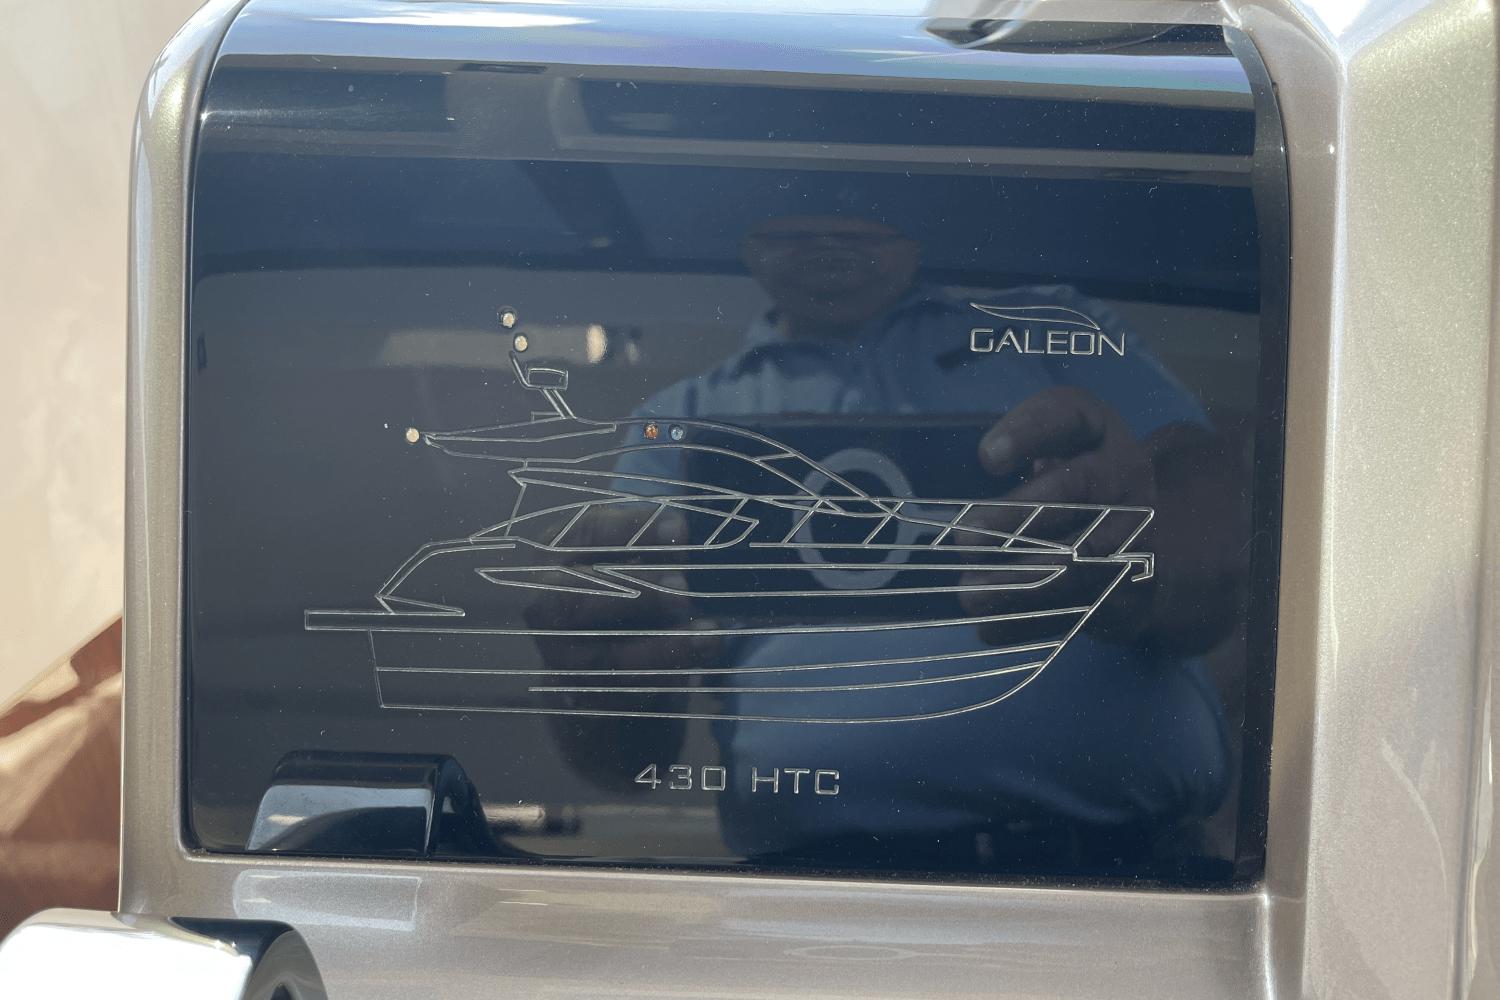 2019 Galeon 430 HTC